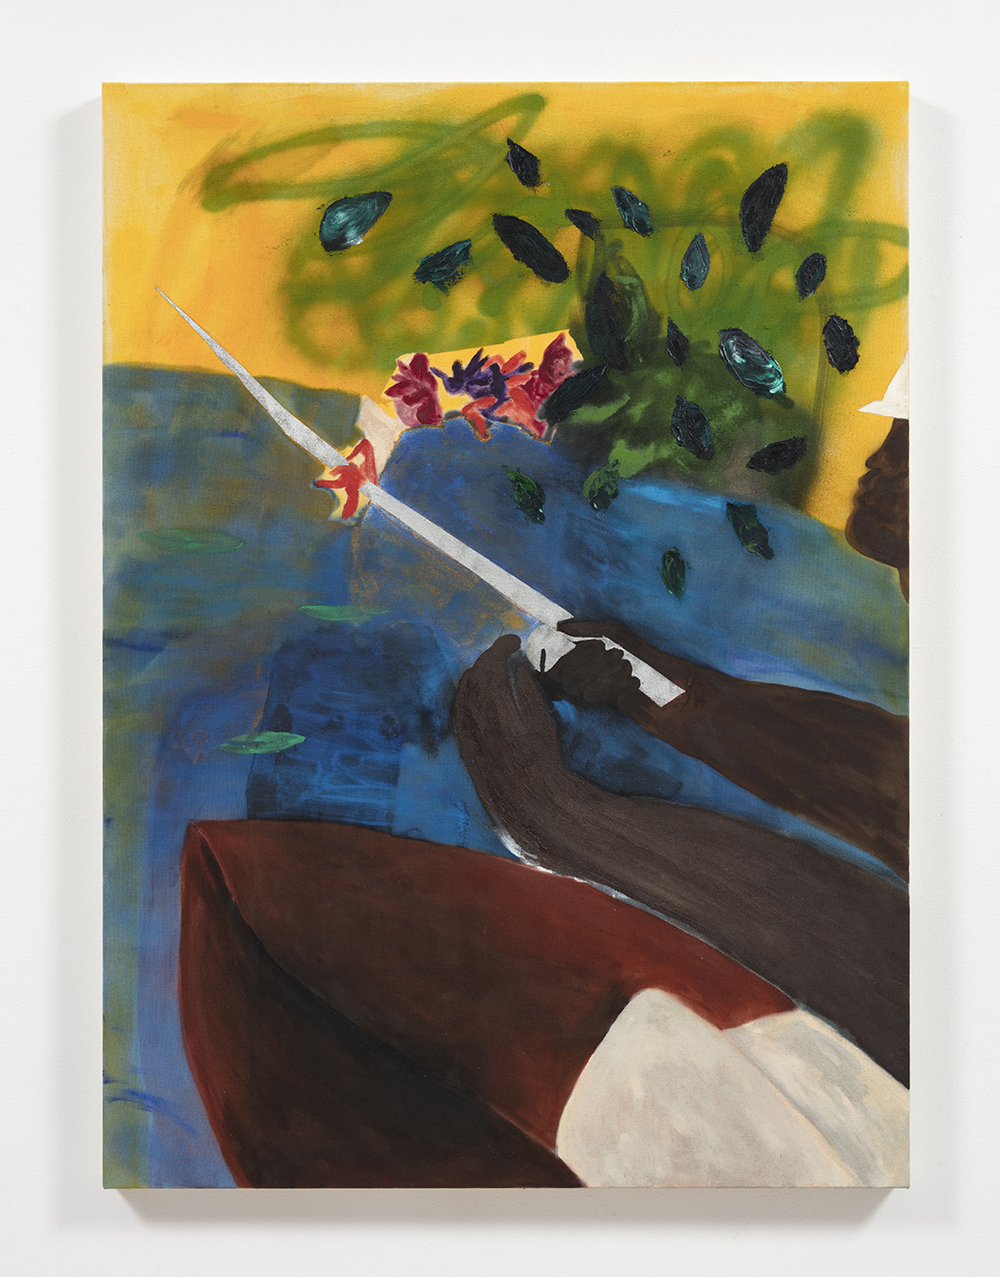 Marcus Leslie Singleton. Bayaguana, 2020. Oil and spray paint on linen, 48 x 35 inches (121.9 x 88.9 cm)